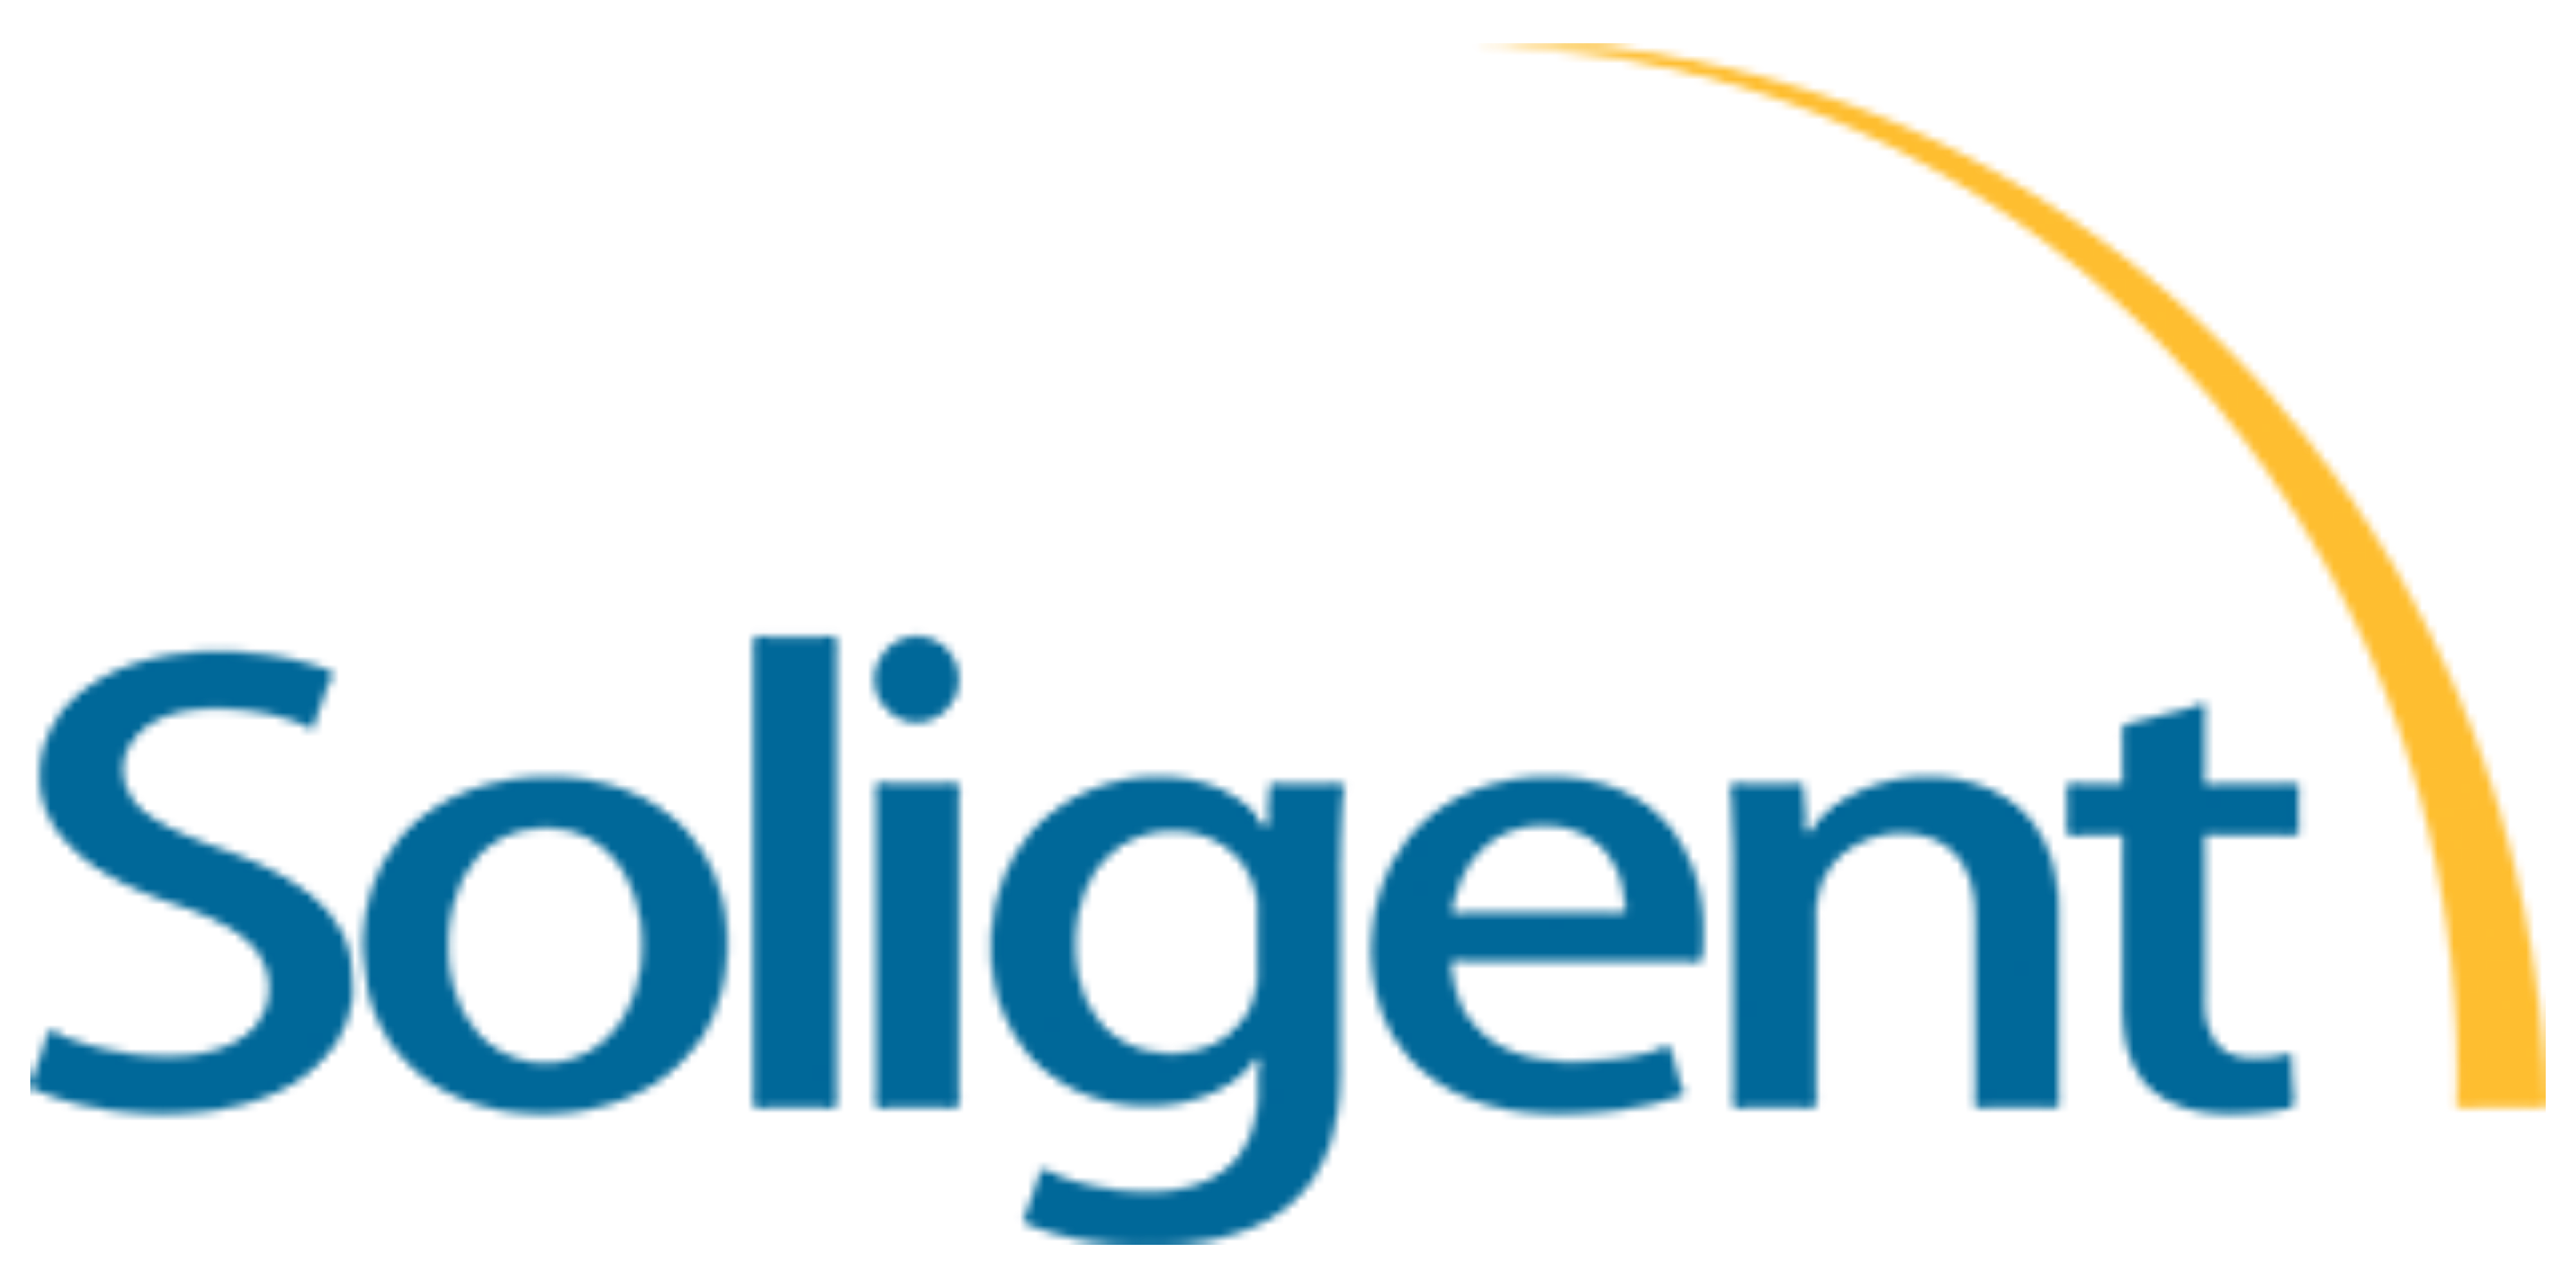 Soligent Logo